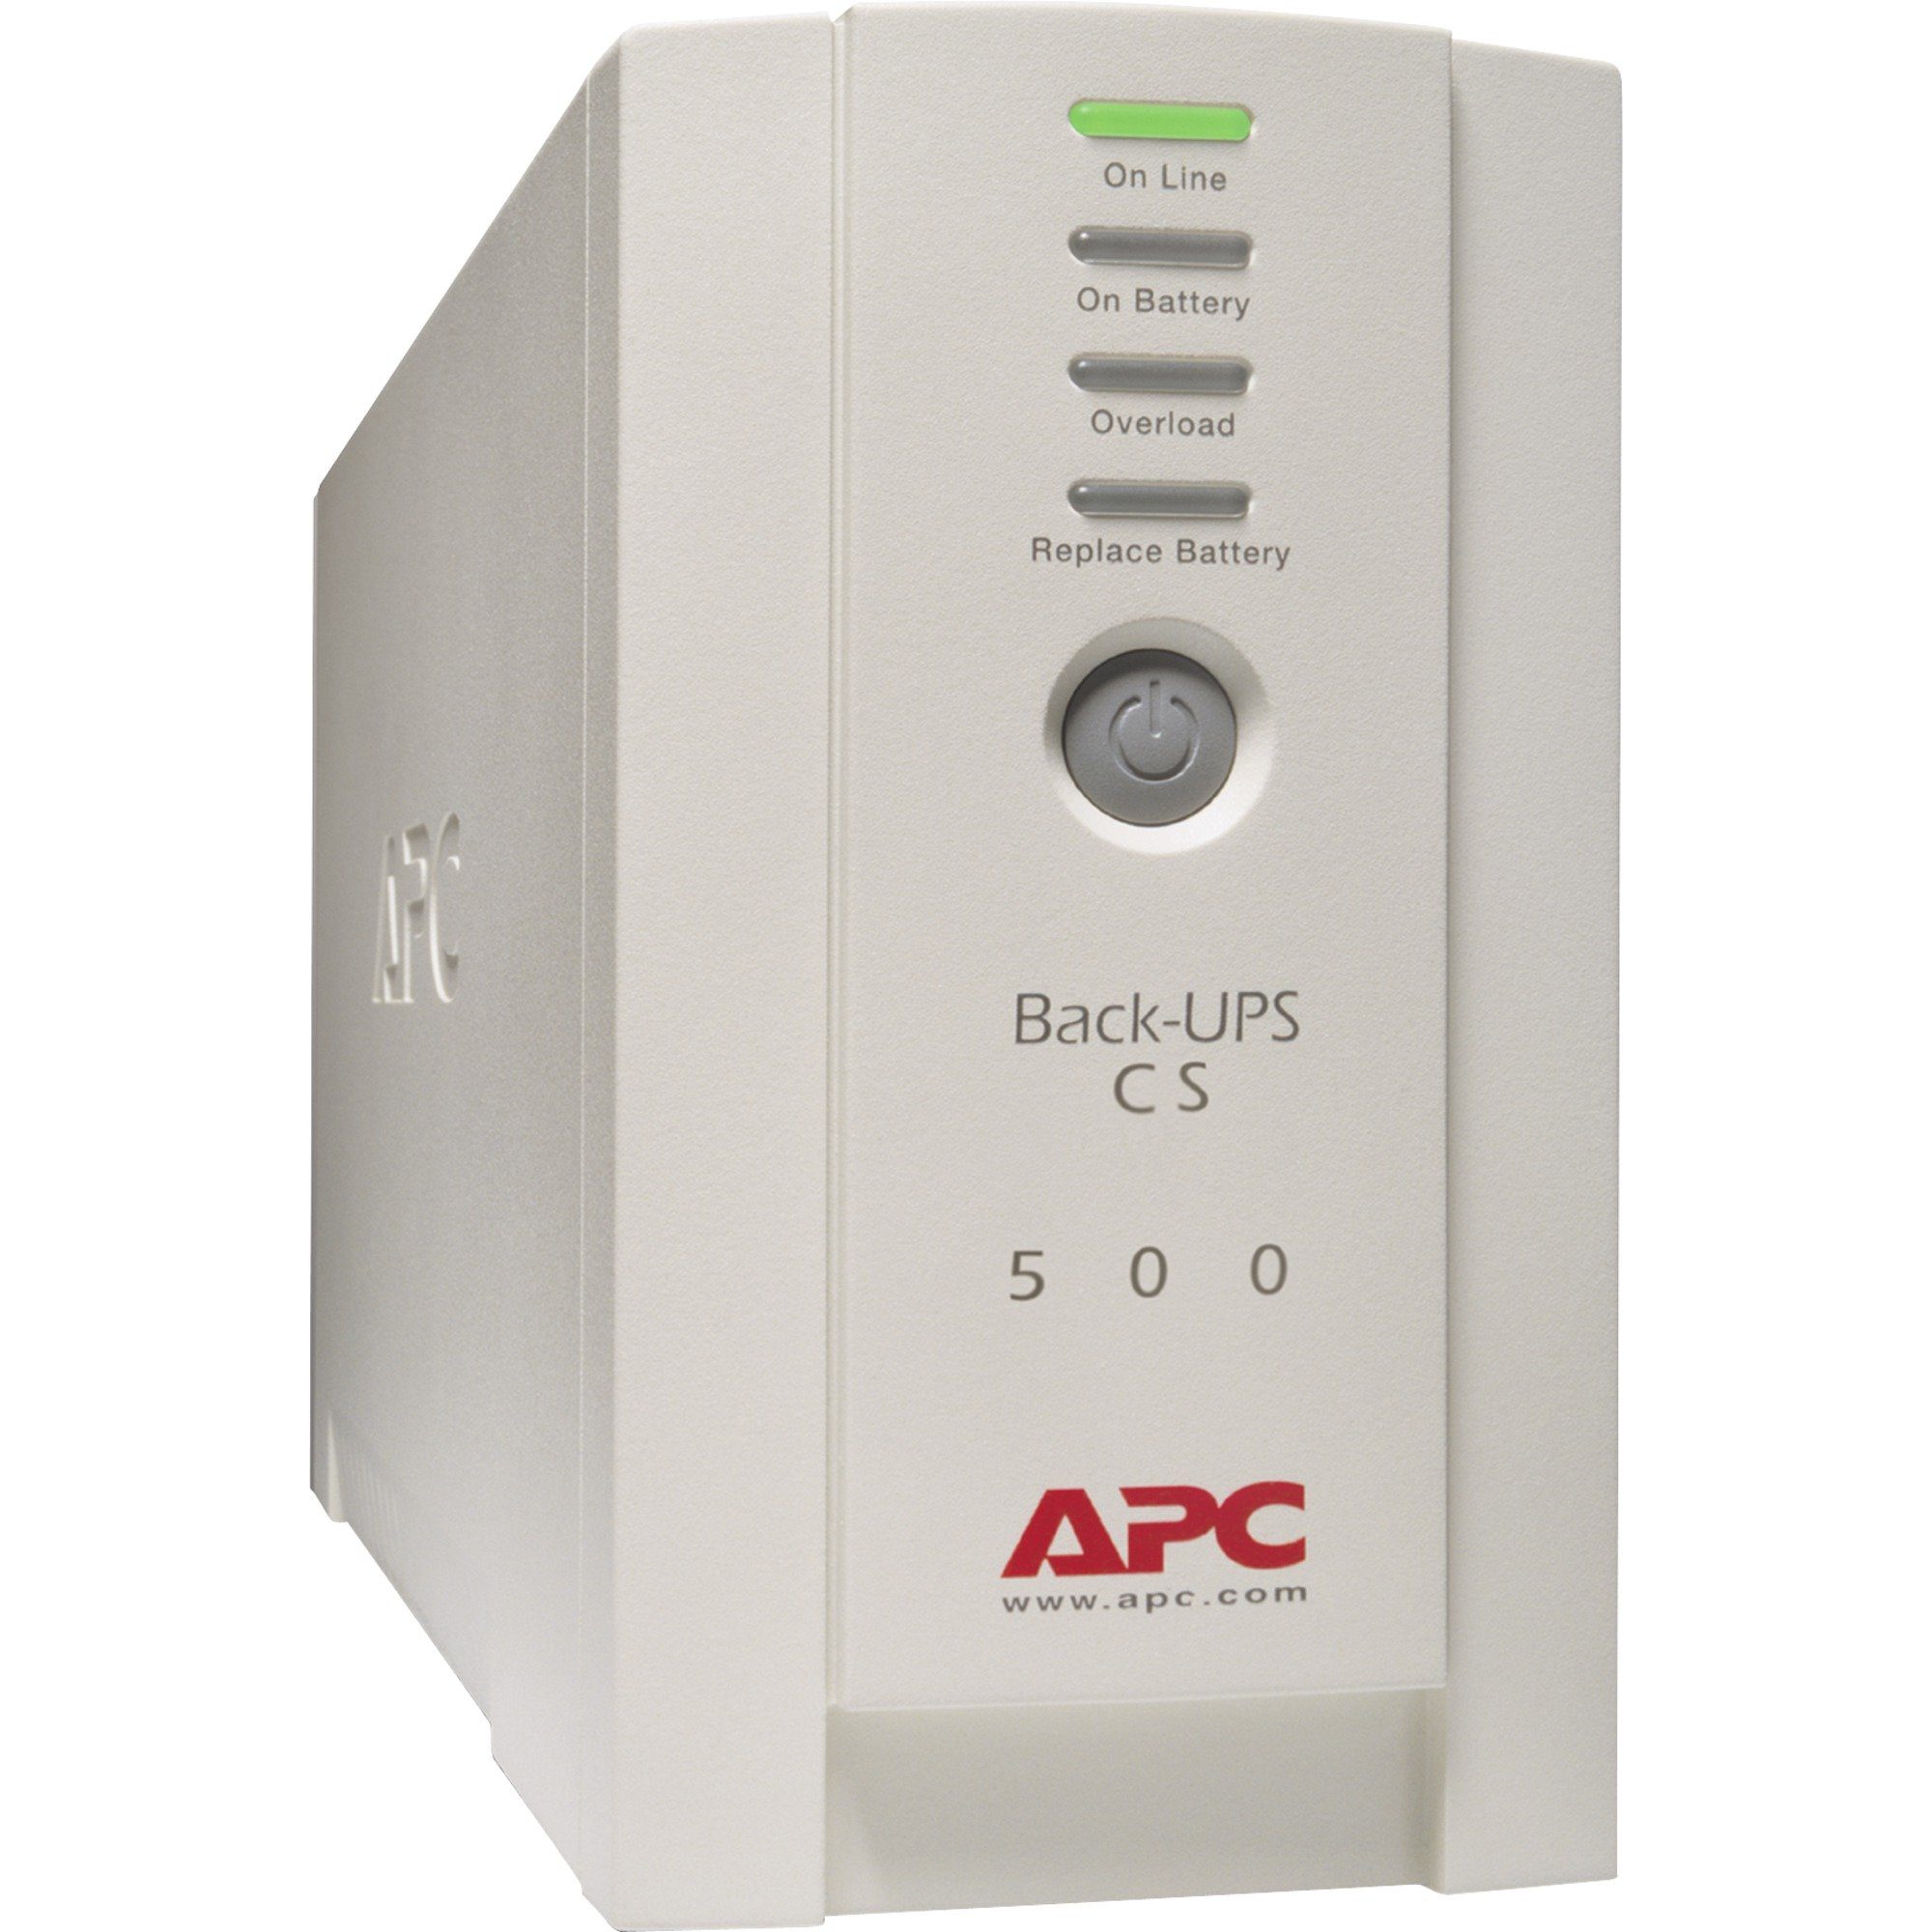 APC APC Back-UPS CS 500, USV Stromspeicher